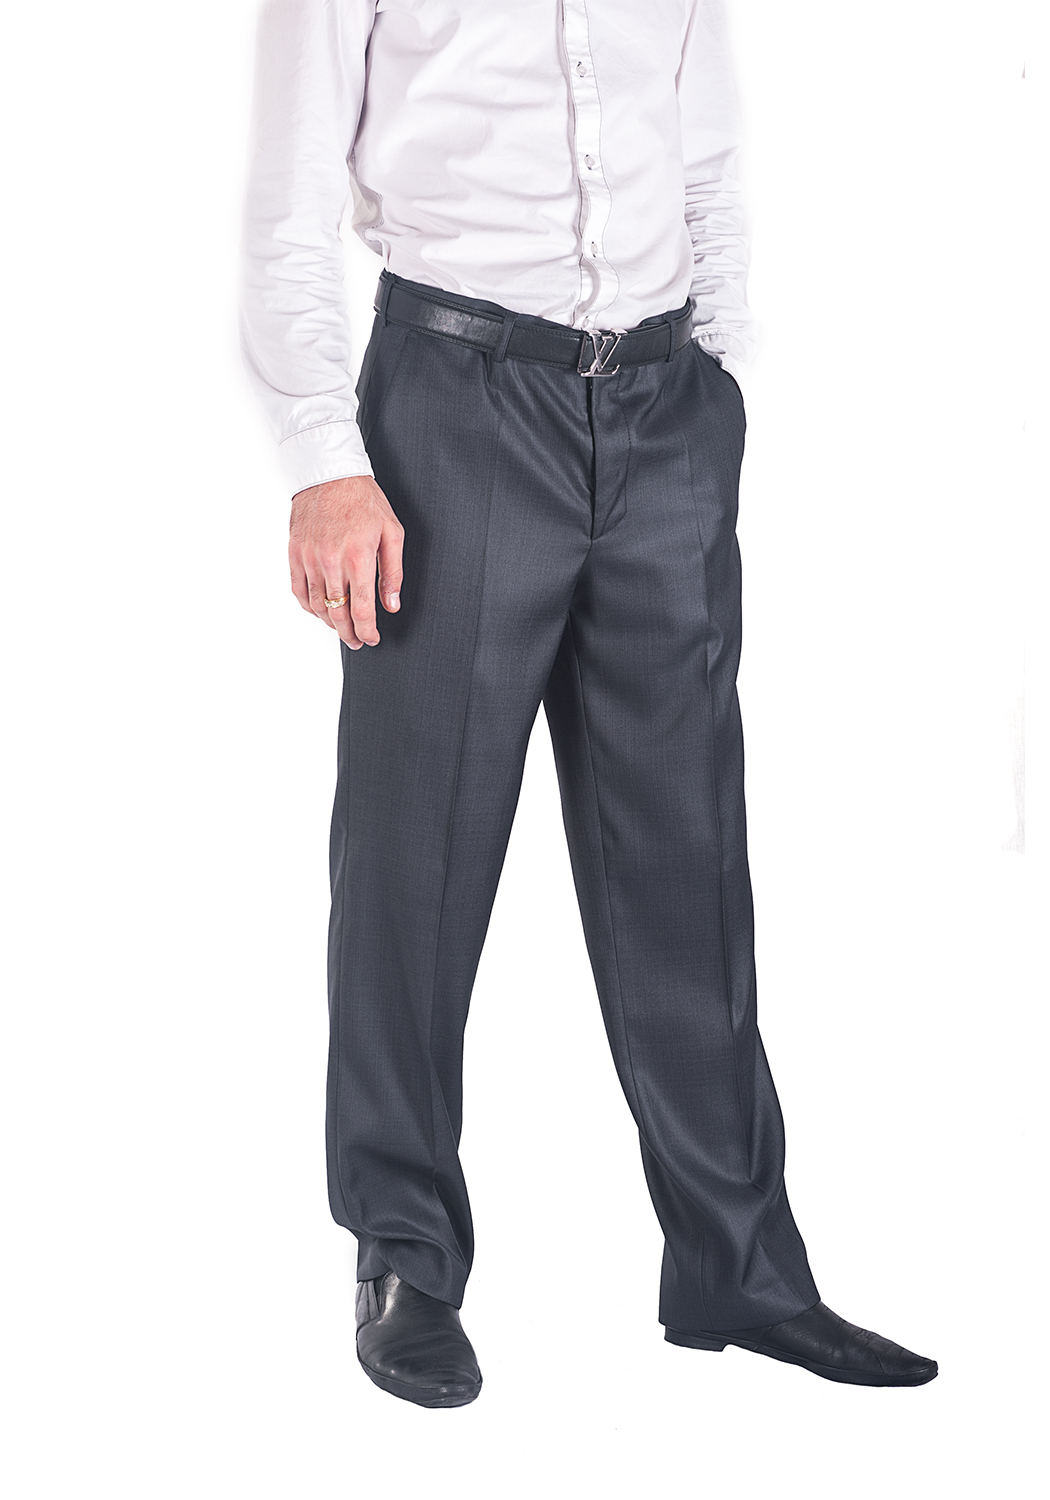 Мужские брюки KAIZER Б887 - Классические мужские брюки \u003c- Брюки для мужчин\u003c- Брюки - Каталог